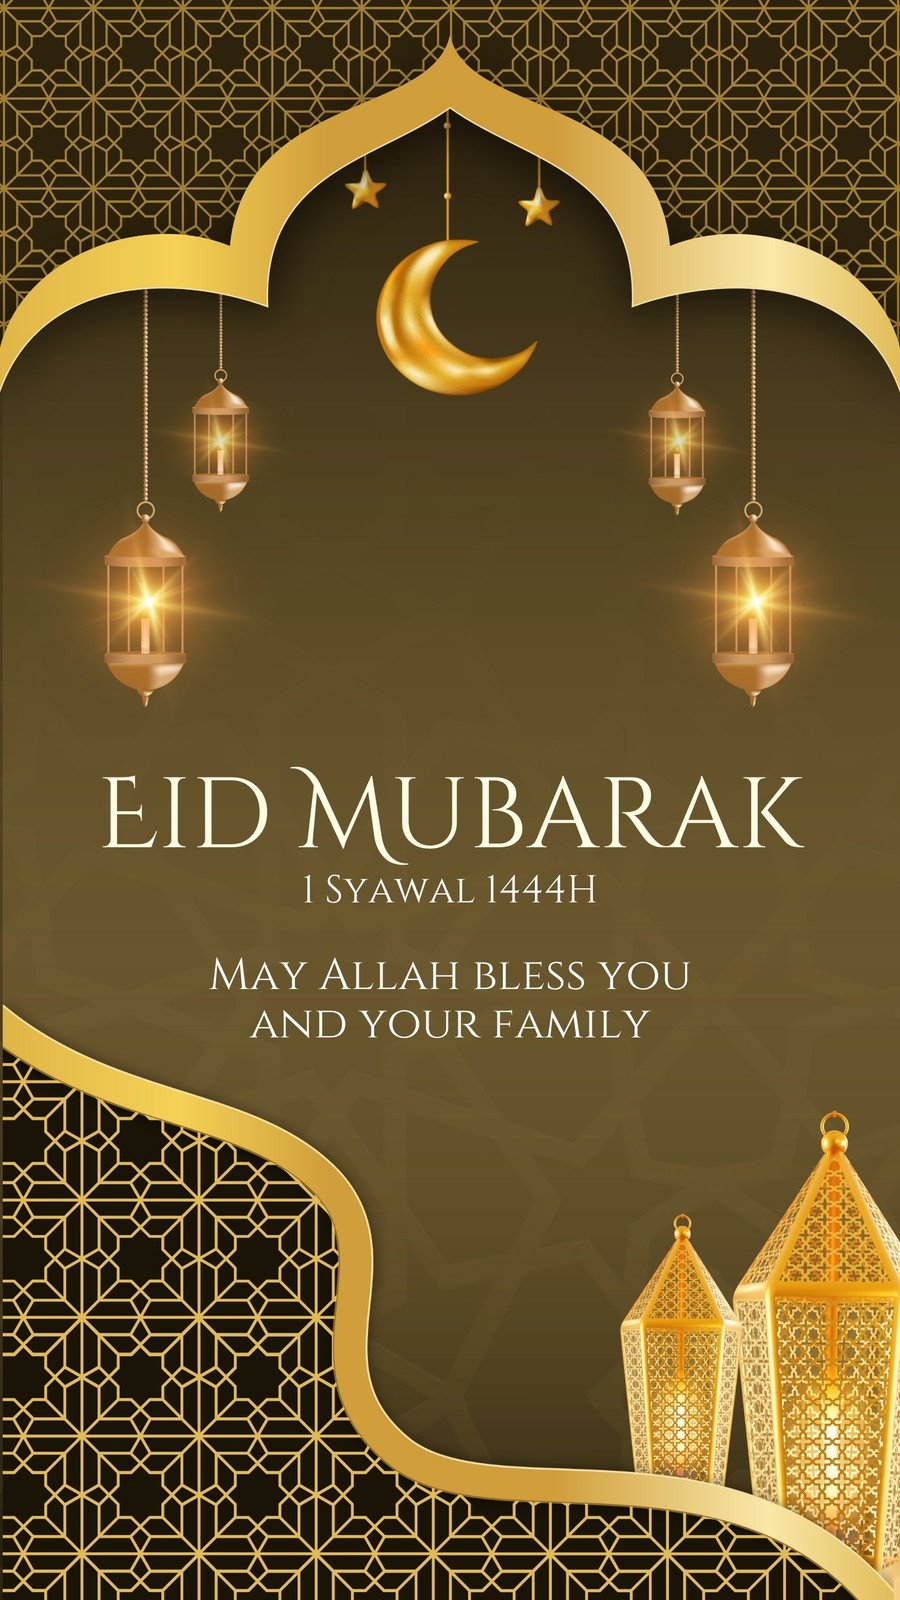 Free and customizable eid mubarak templates